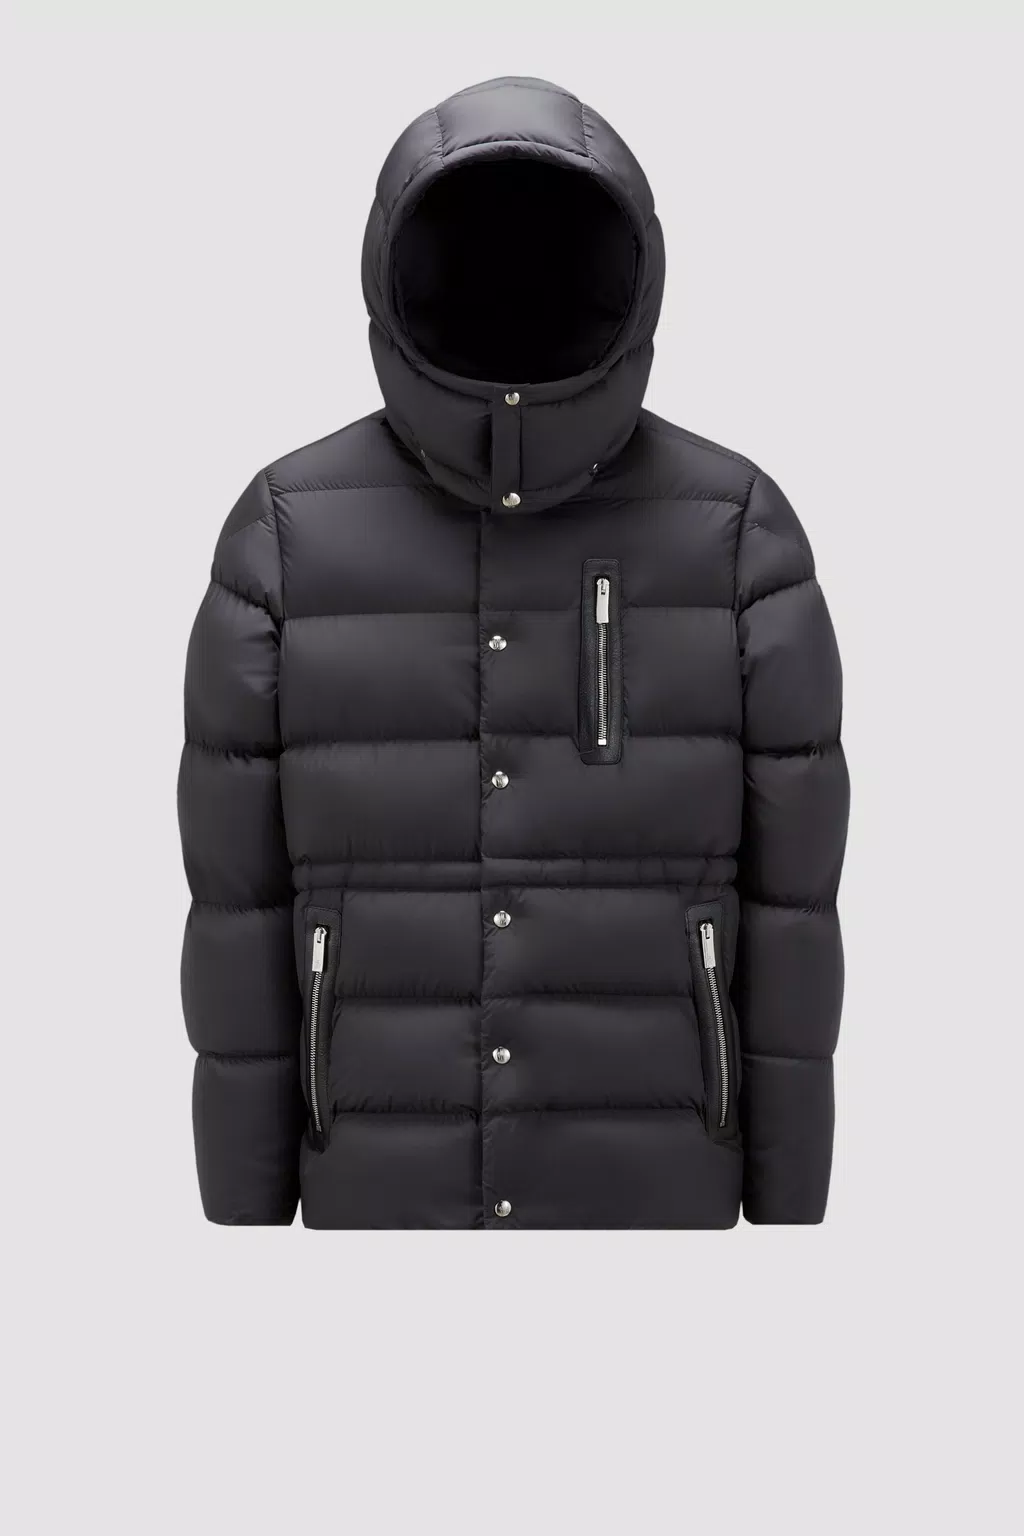 Coats & Jackets for Men - Outerwear | Moncler GB